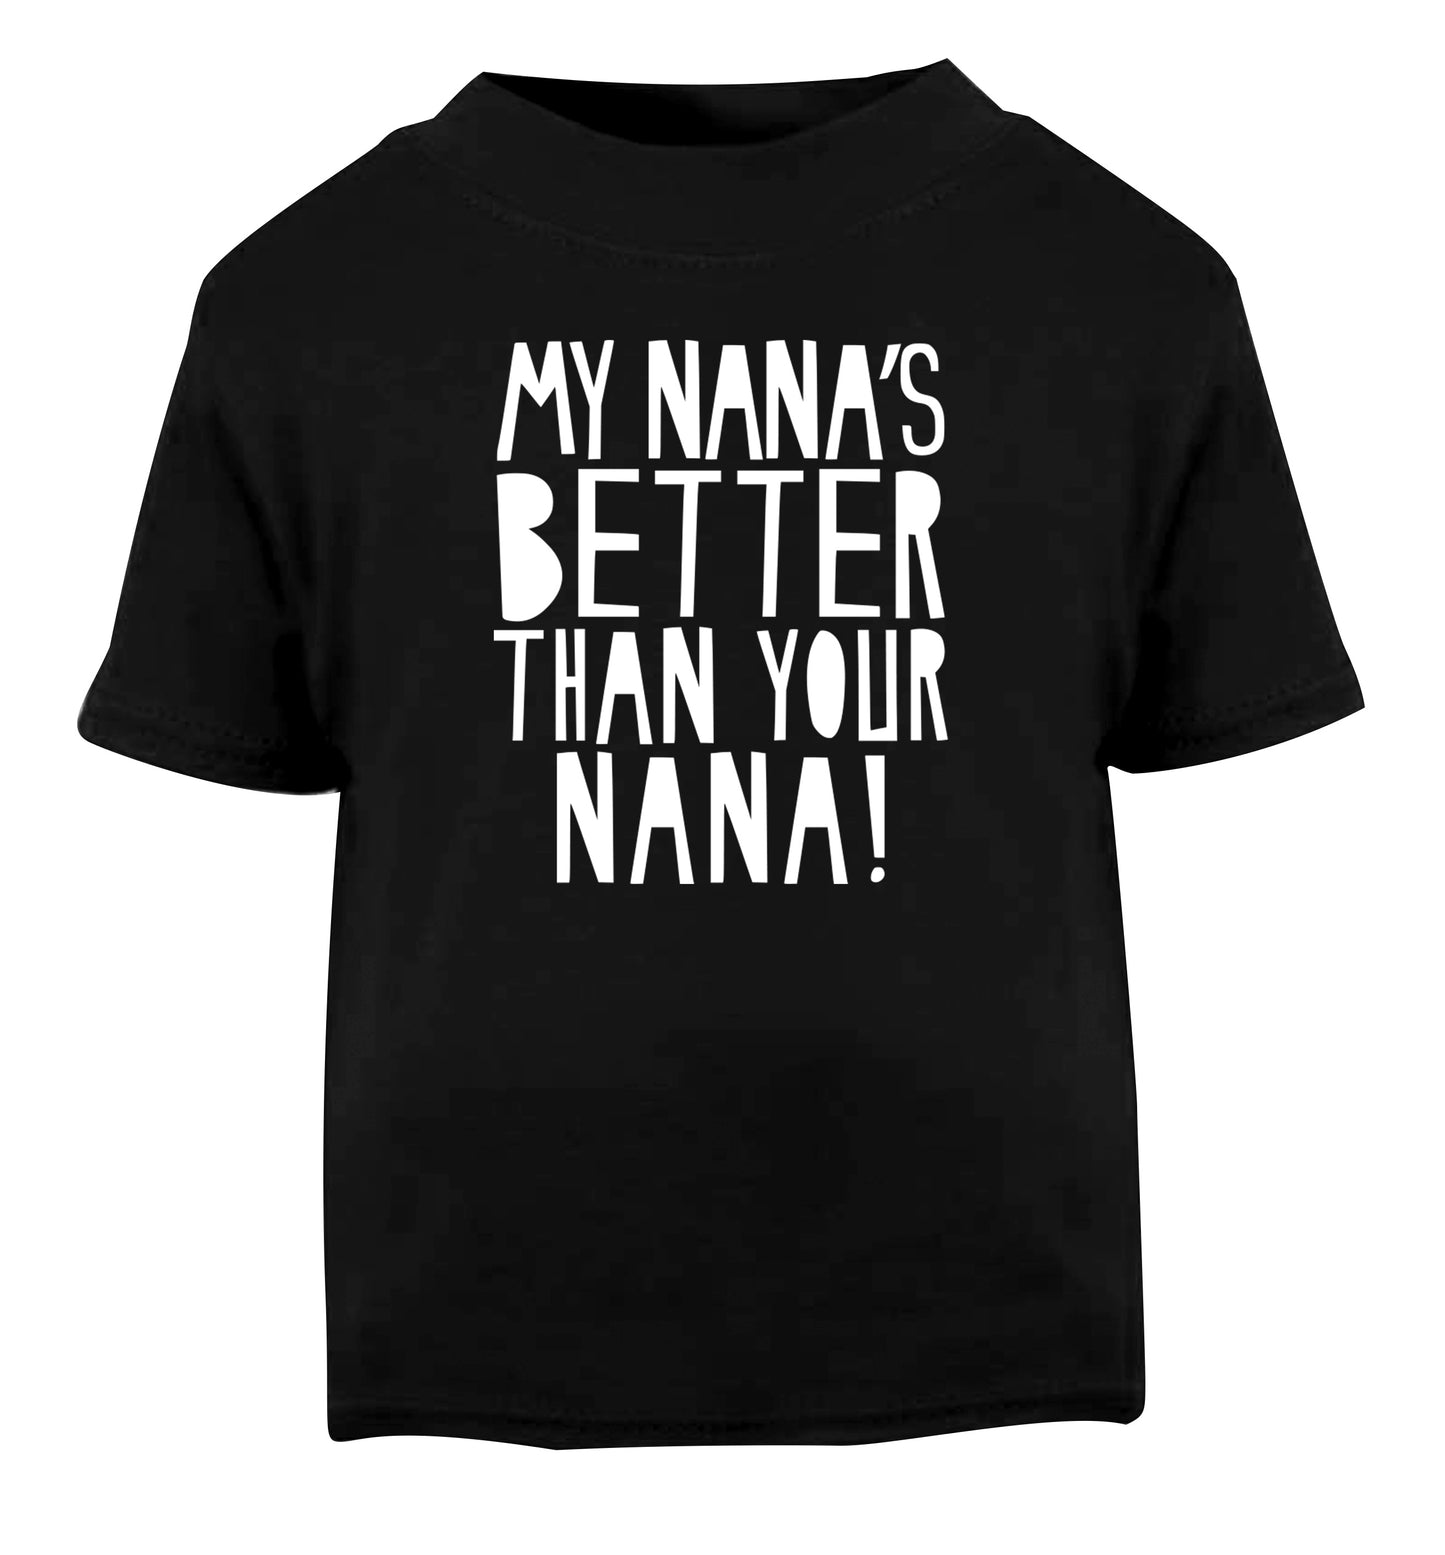 My nana's better than your nana Black Baby Toddler Tshirt 2 years